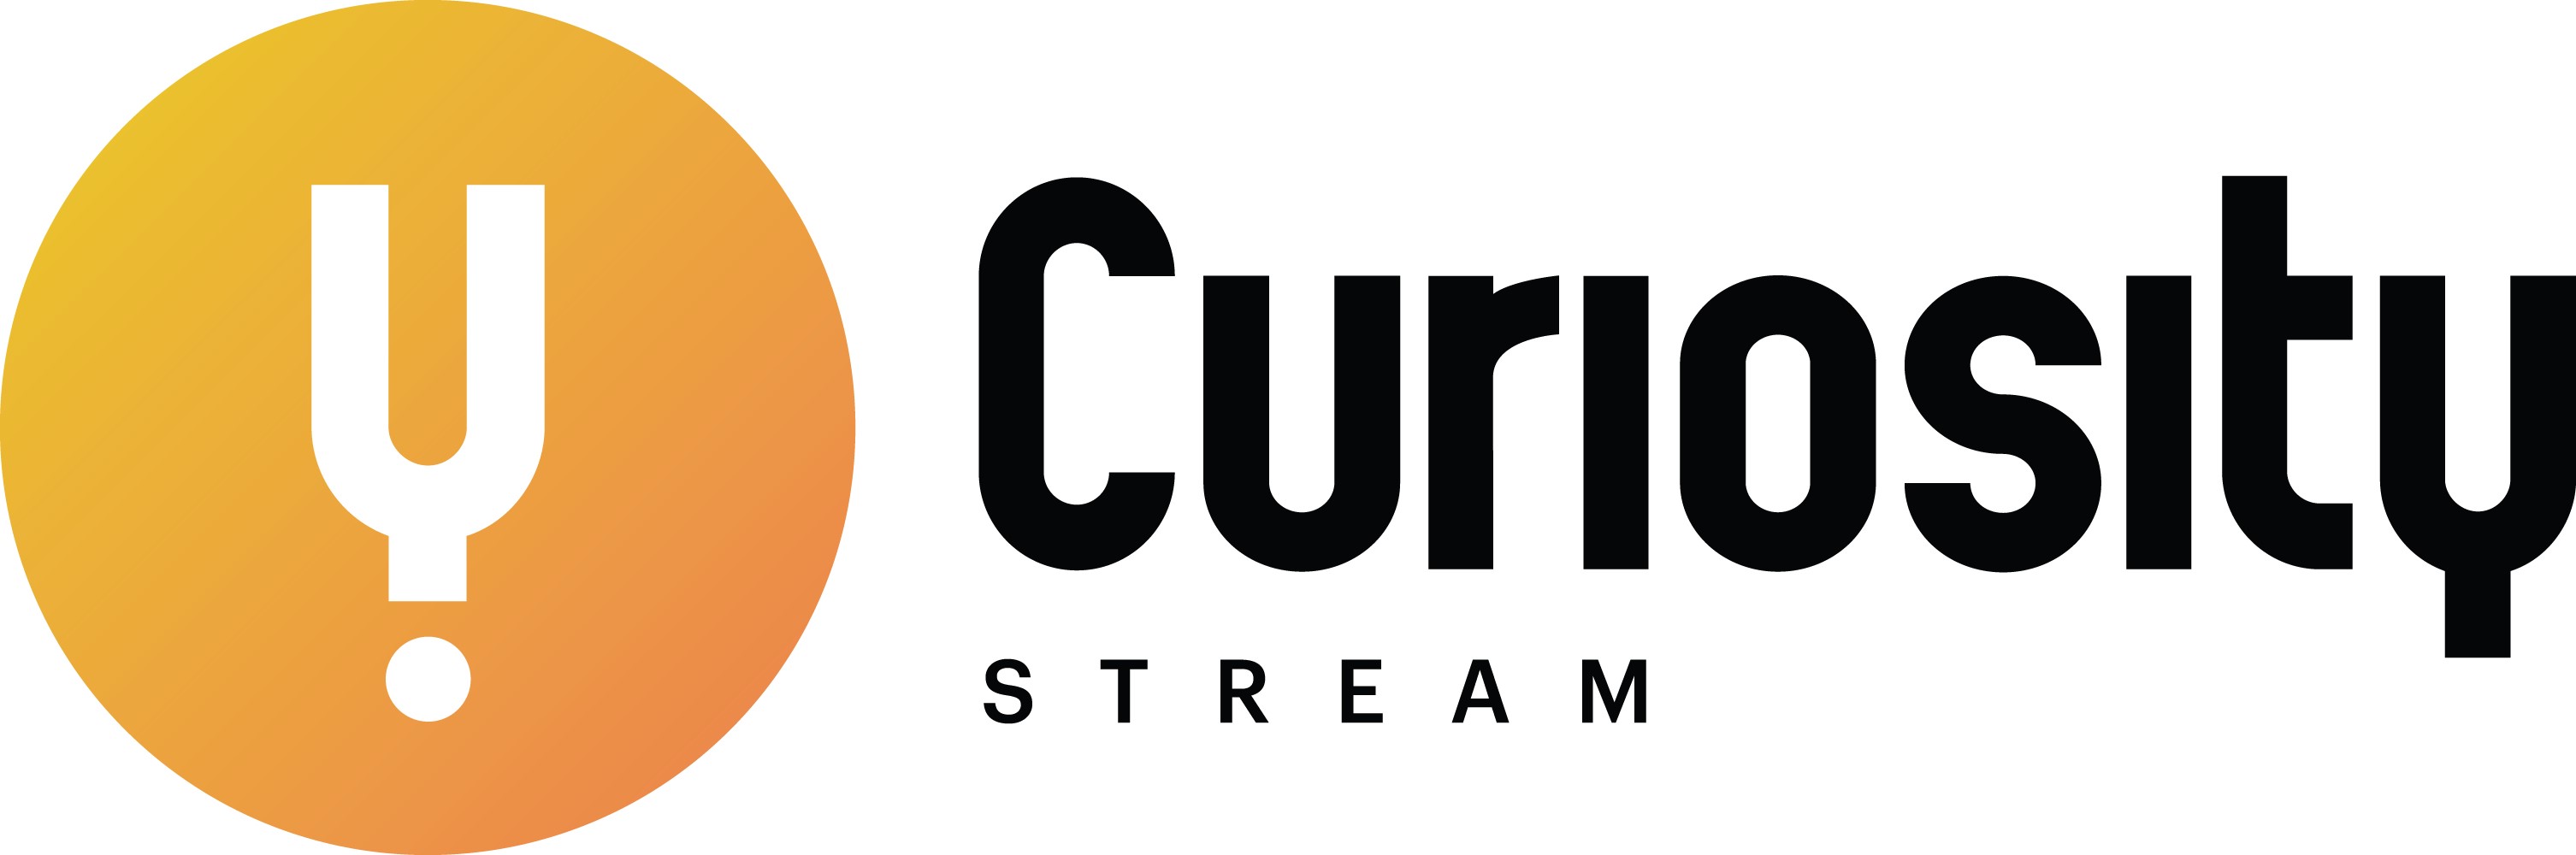 CURI logo jpeg.jpg